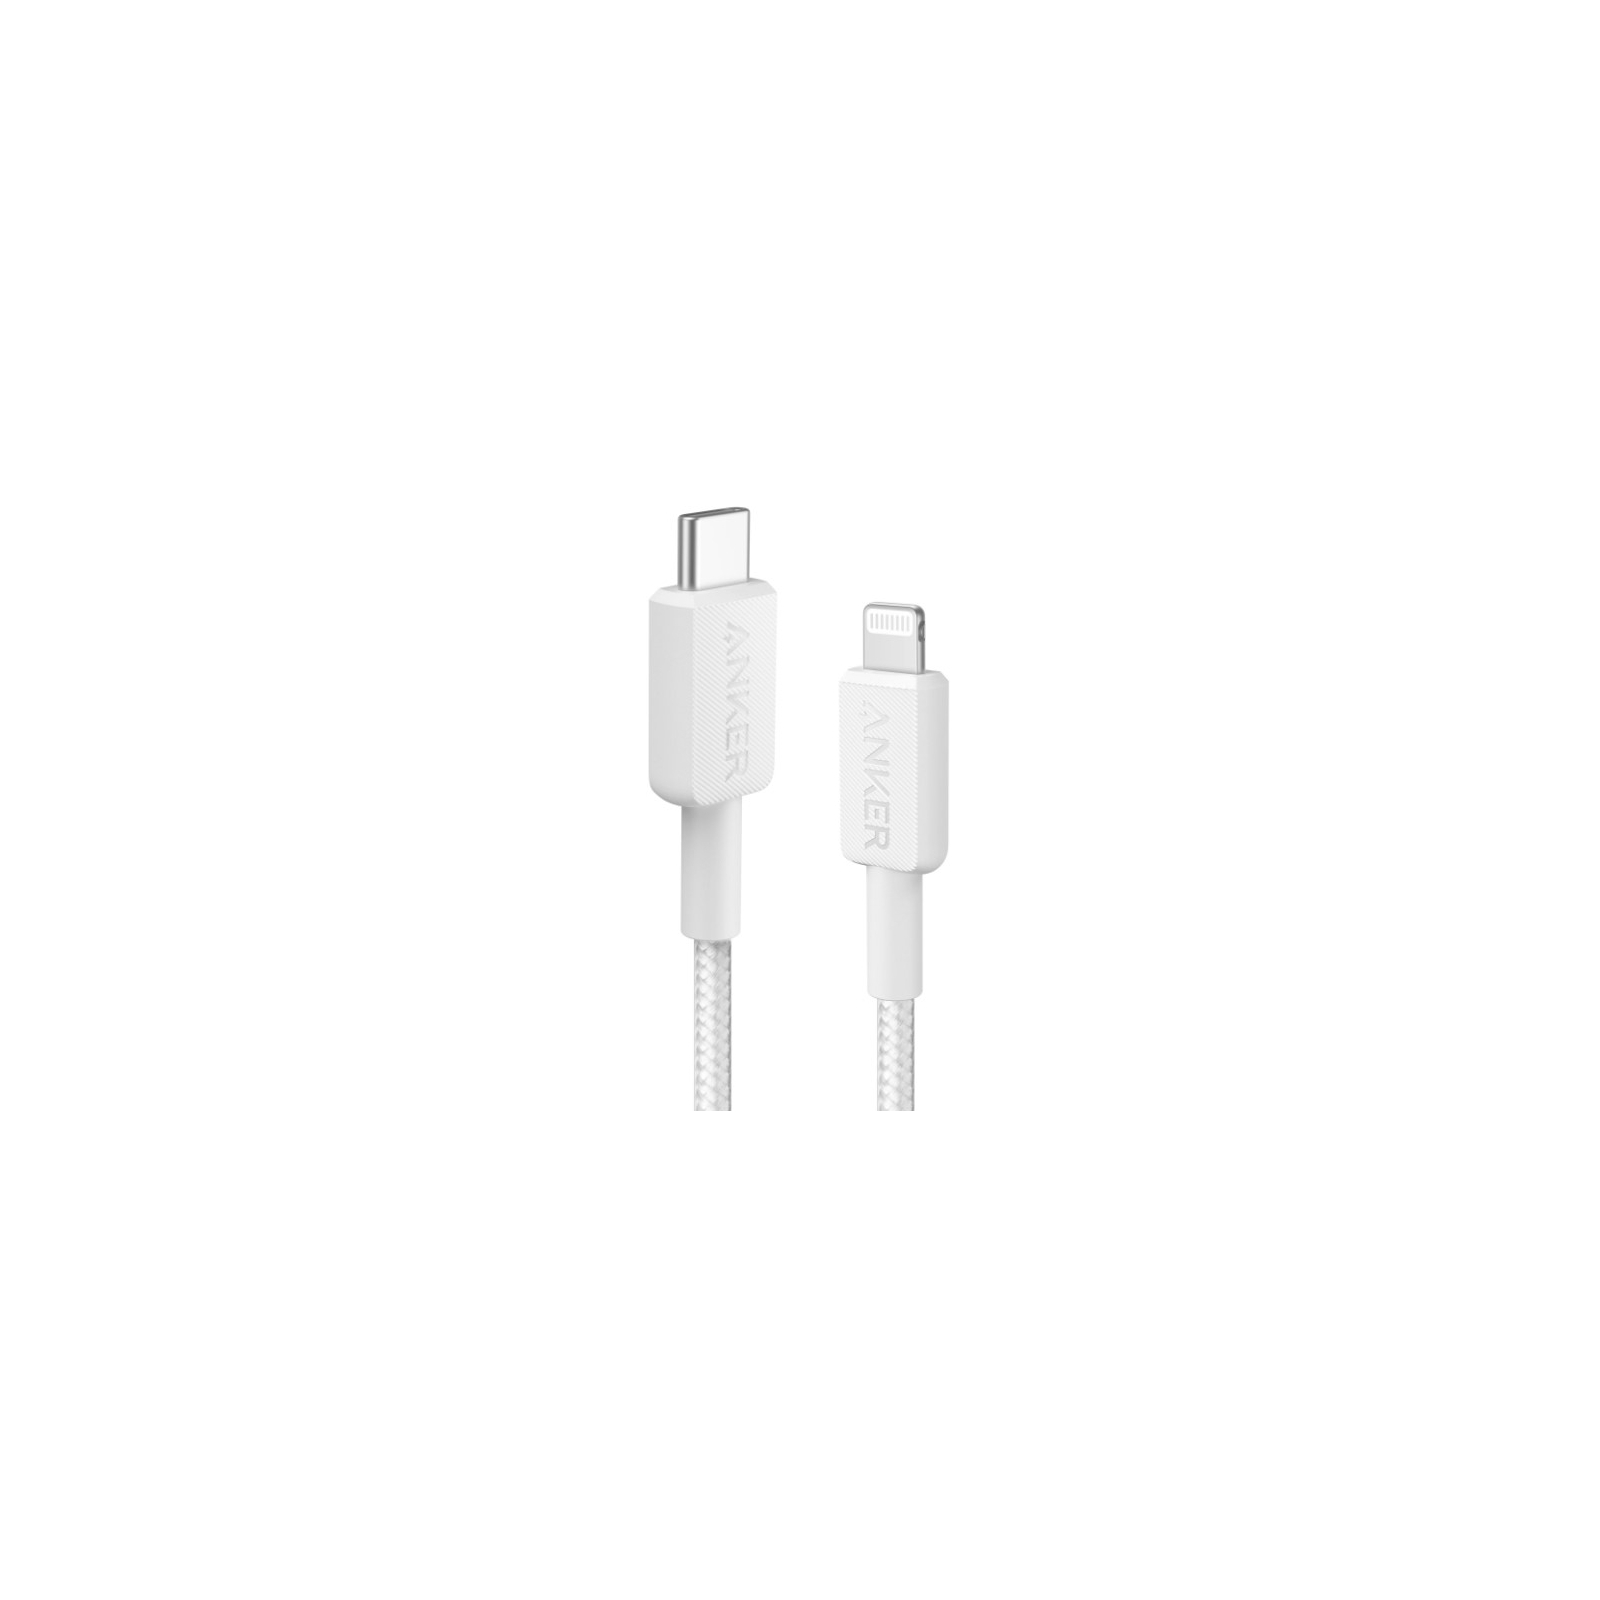 Дата кабель USB 2.0 AM to Lightning 0.9m 322 White Anker (A81B5H21/A81B5G21)